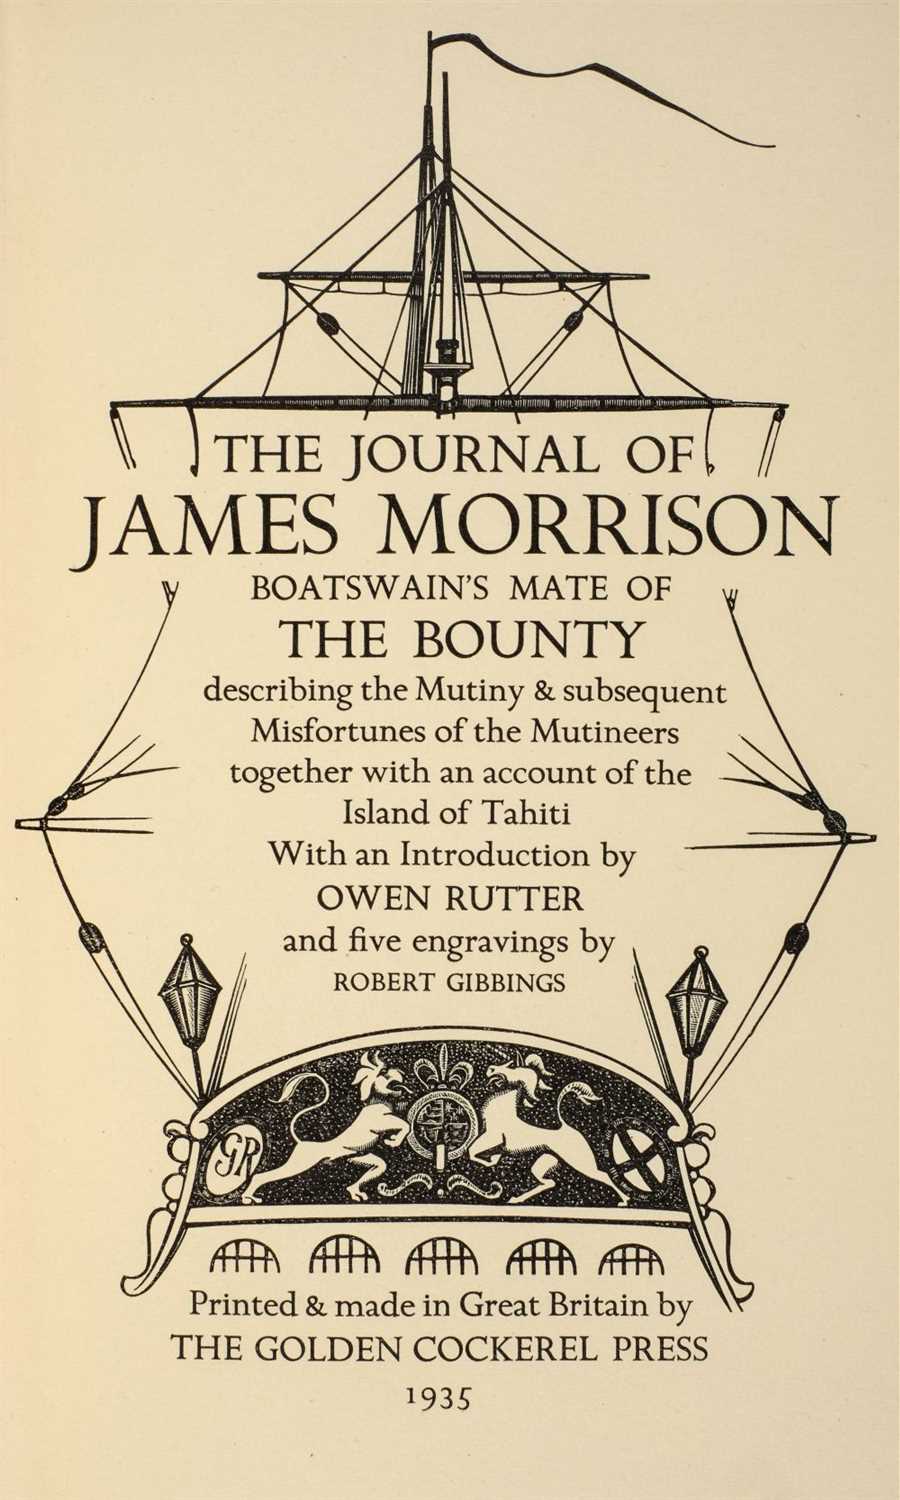 The Golden Cockerel Press. The Journal of James Morrison Boatswain's Mate...